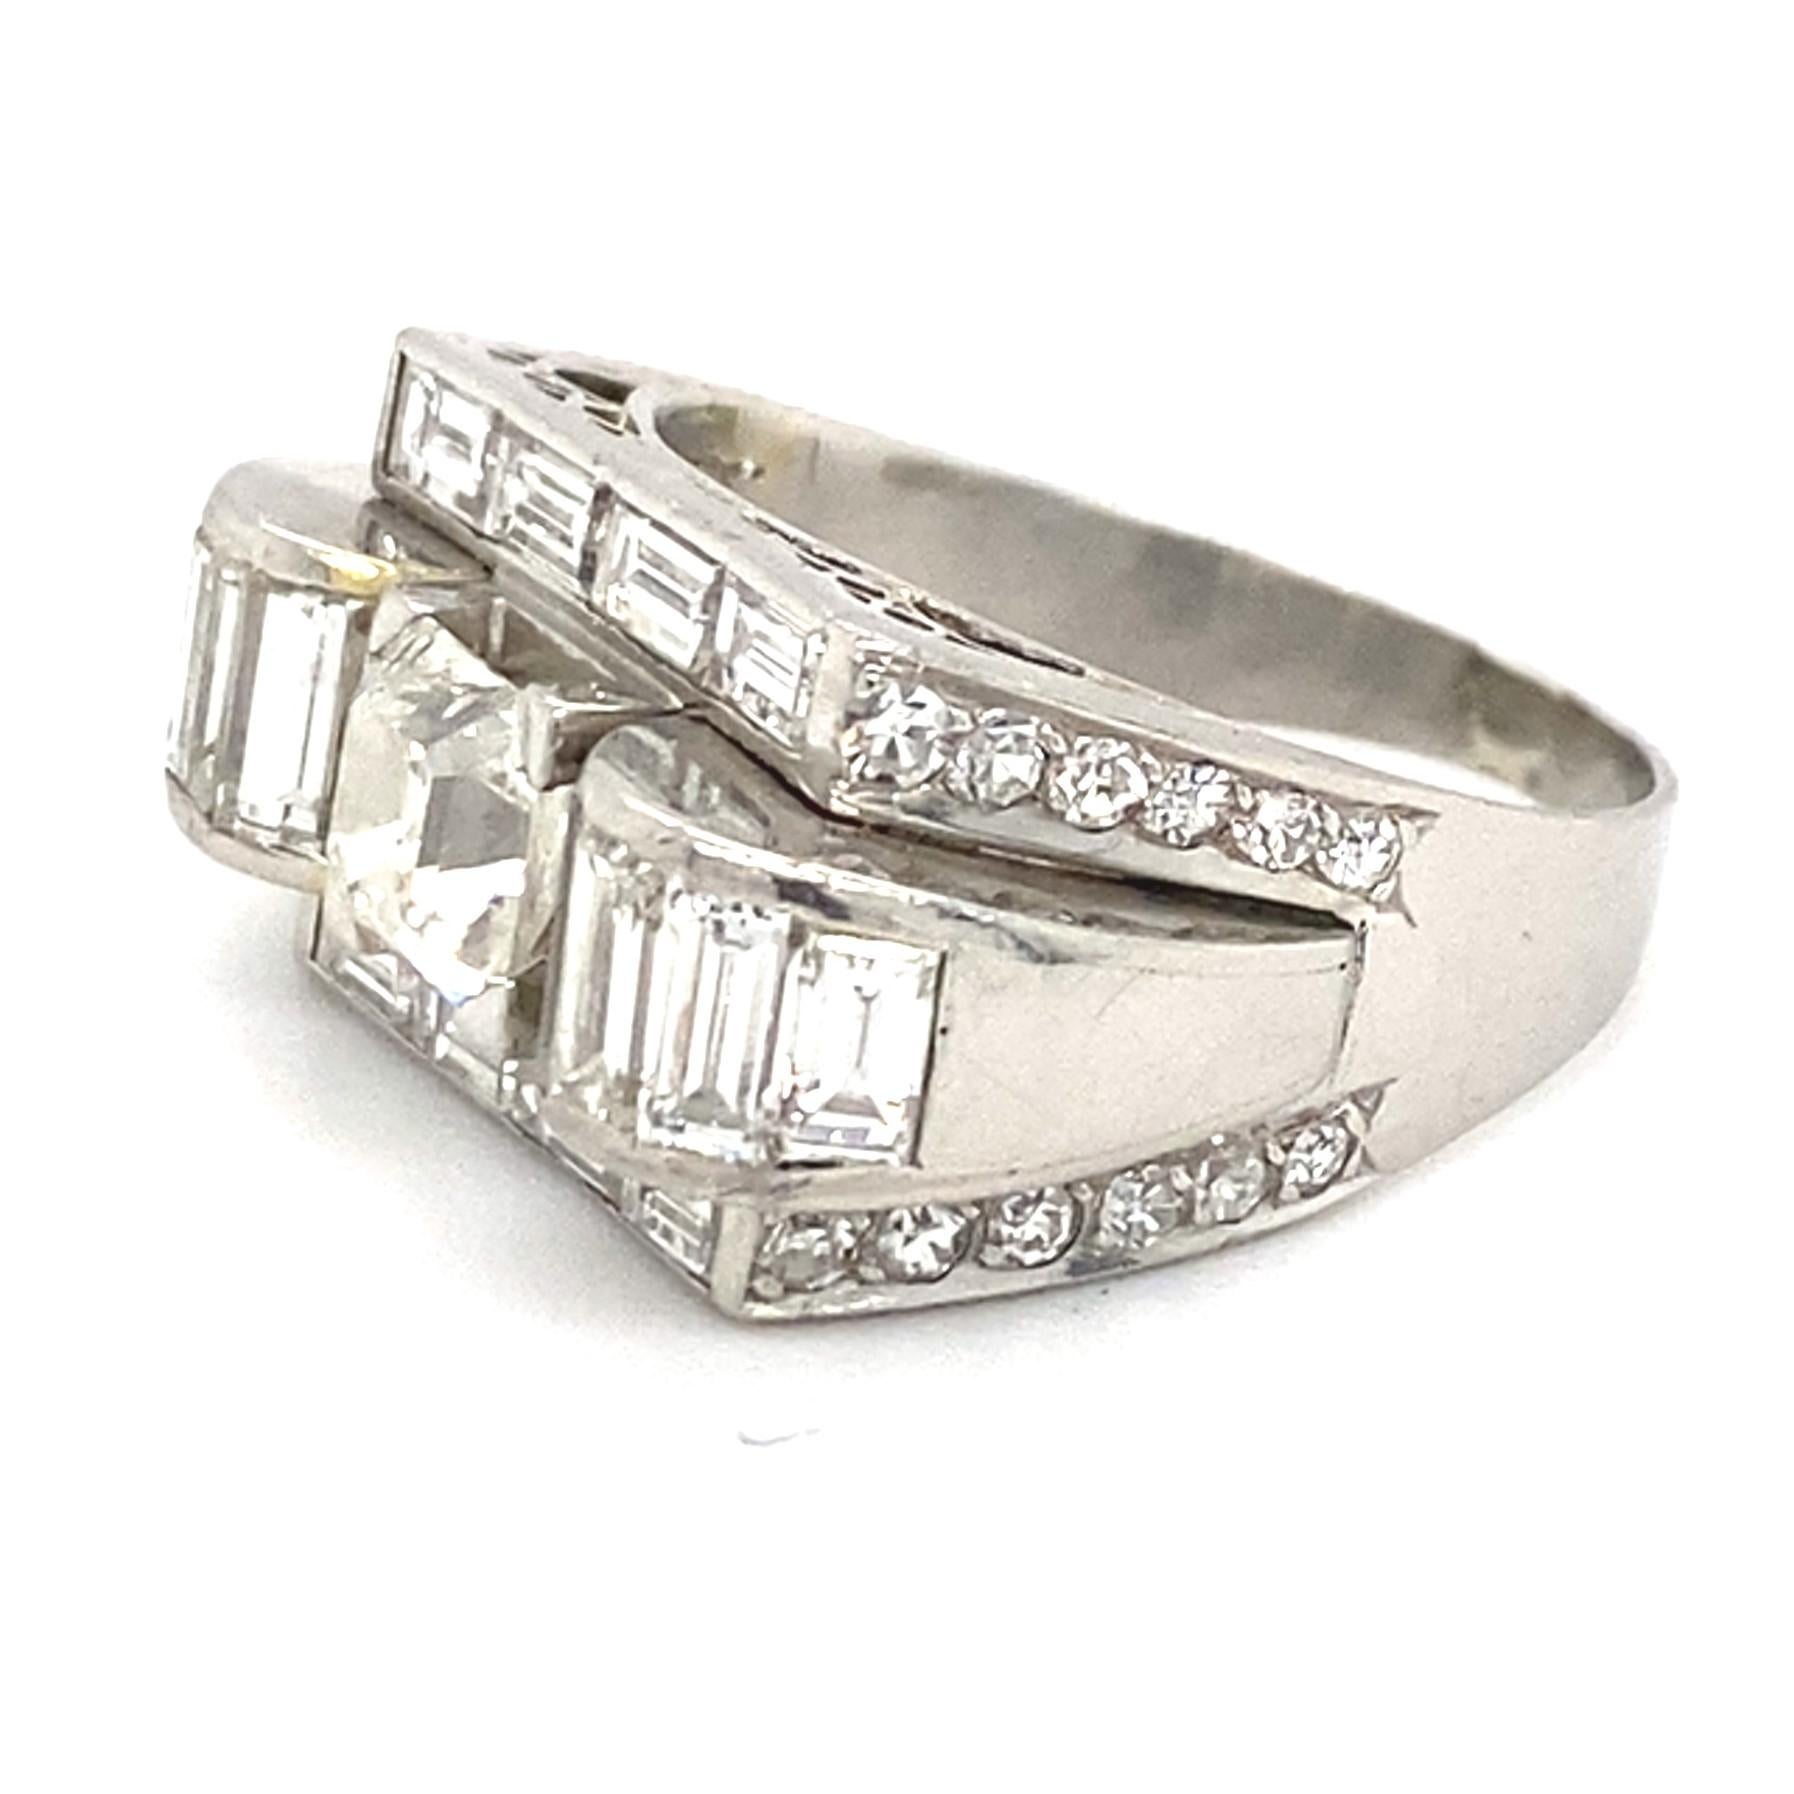 Classy Art Déco diamond and platinum ring of tank design, set with a gorgeous Asscher-cut Diamond of 1.40 carats, 16 baguette-cut diamonds totalling circa 2.2 carats and 24 single-cut diamonds totalling circa 0.5 carats. The ring shank features